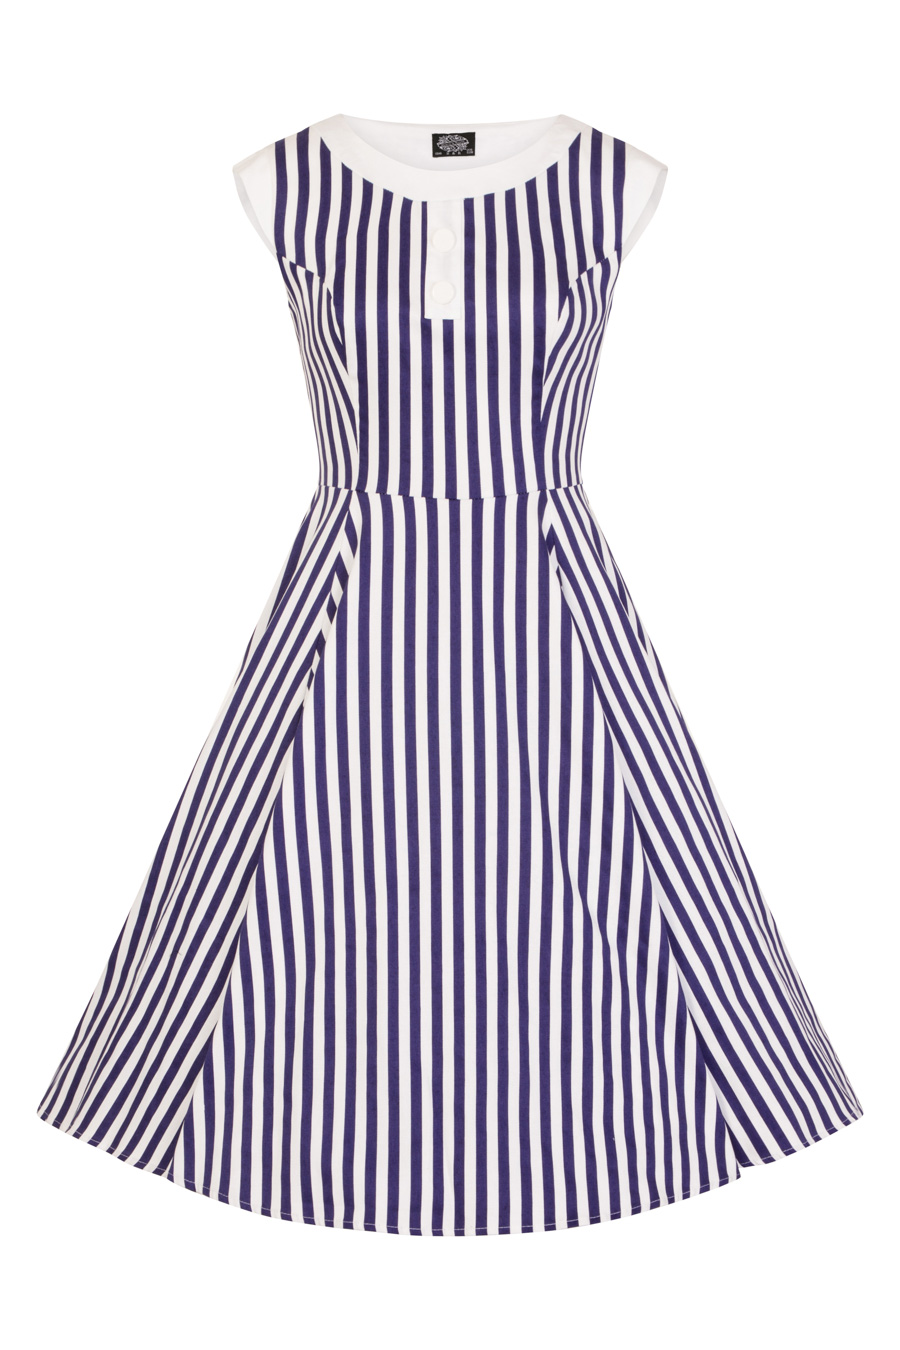 Blue Stripe Hepburn Dress in White/Blue - Hearts & Roses London